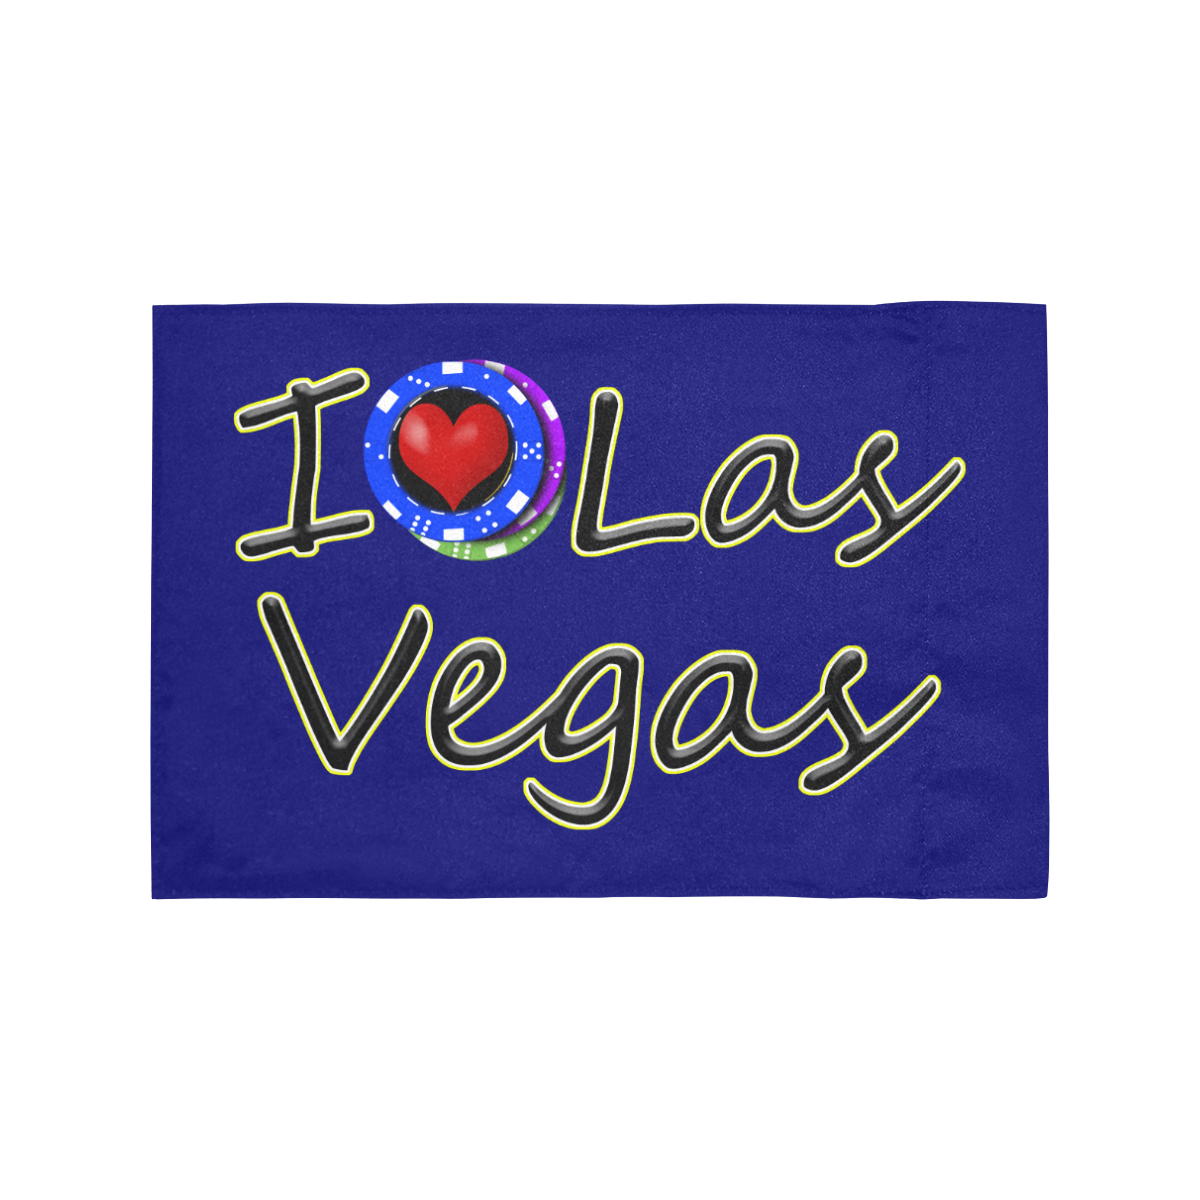 I Love Las Vegas / Blue Motorcycle Flag (Twin Sides)